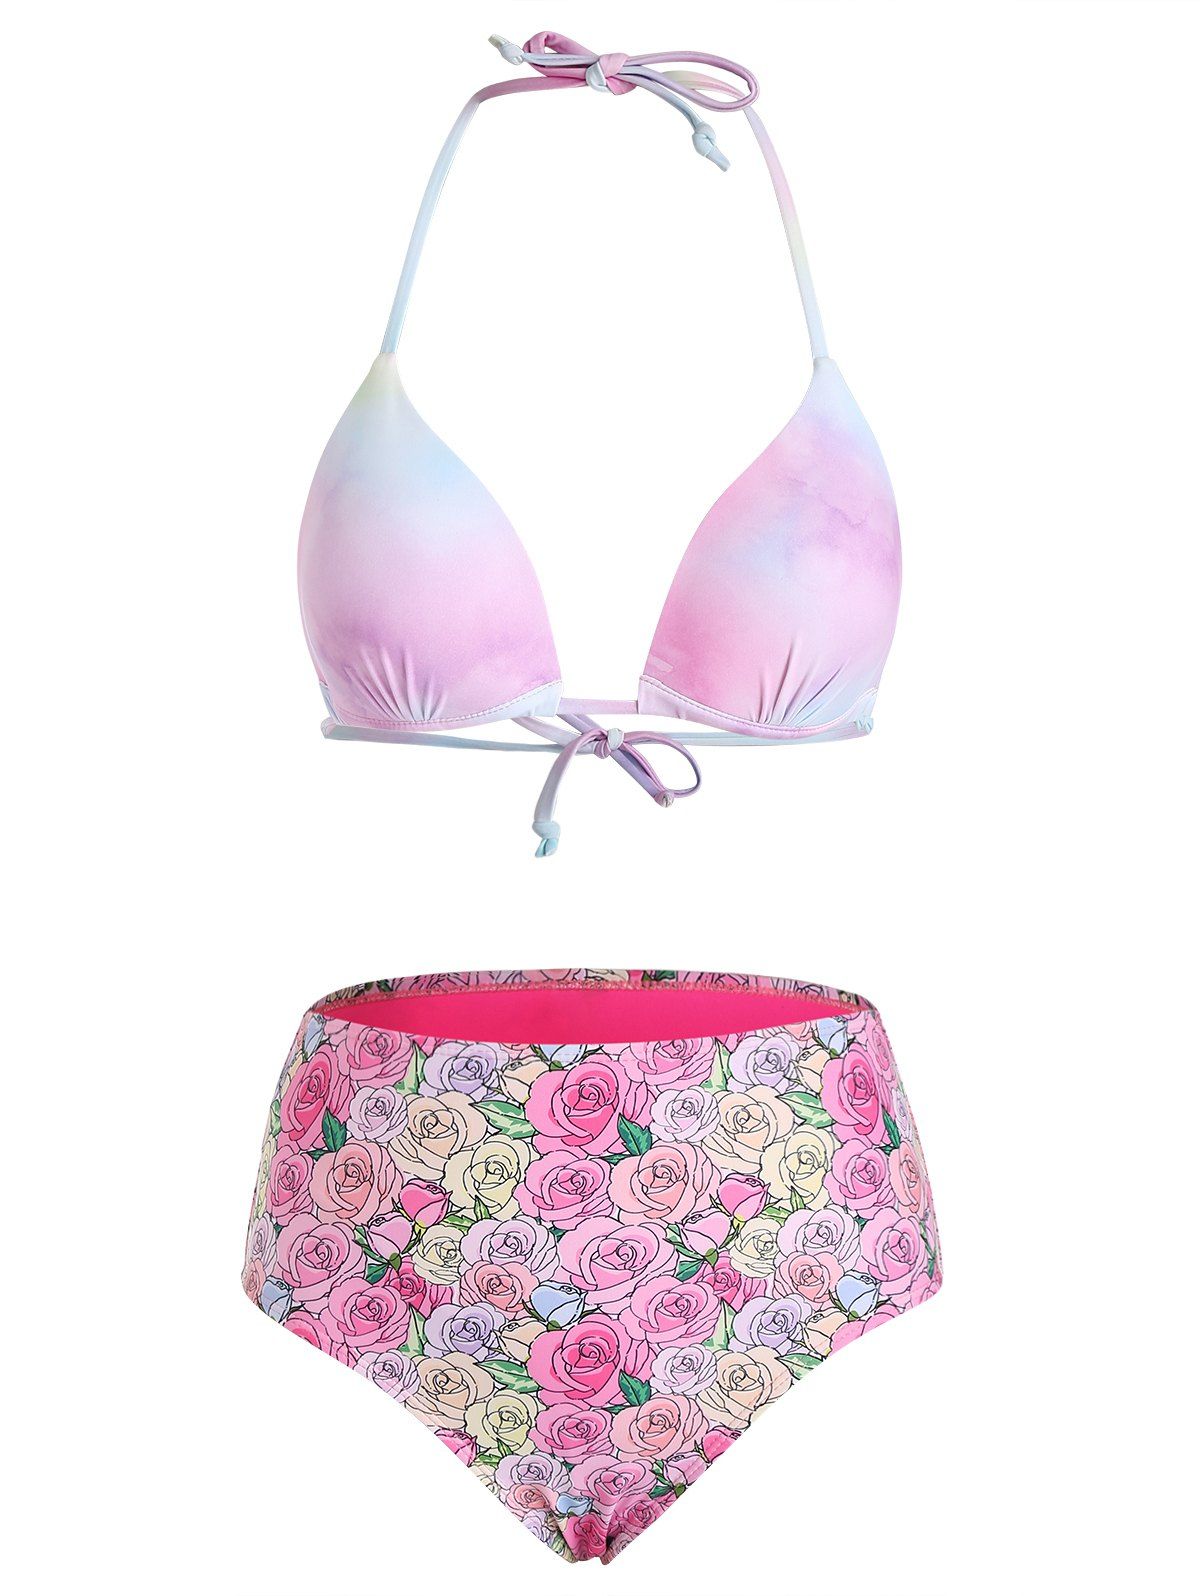 Tie Dye Halter Beach Bikini Swimsuit Allover Rose Print High Cut Tied Open Back Three Piece Swimwear - LIGHT PINK XL